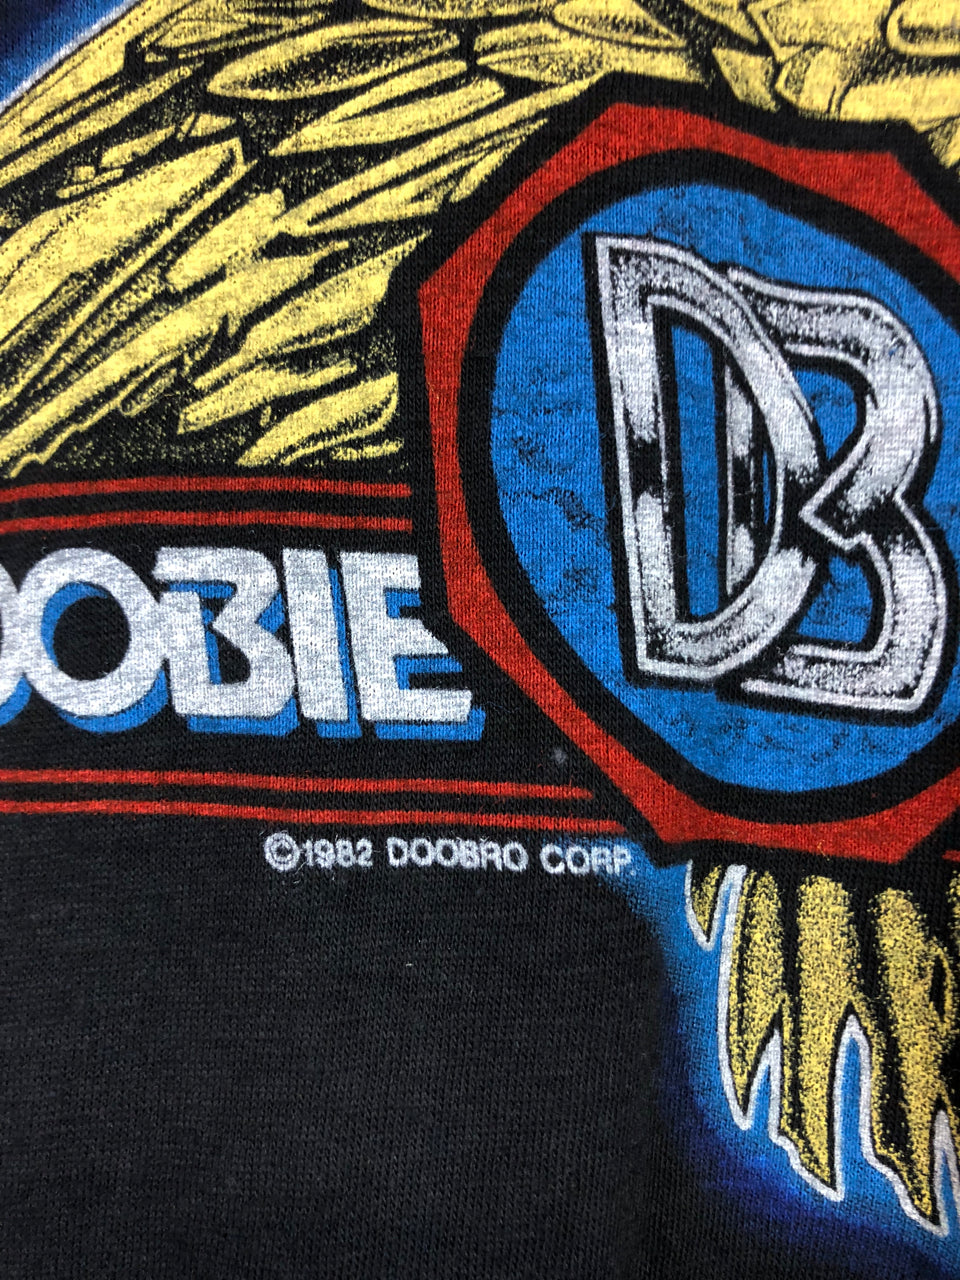 The Doobie Brothers Farewell Tour 1982 T-Shirt